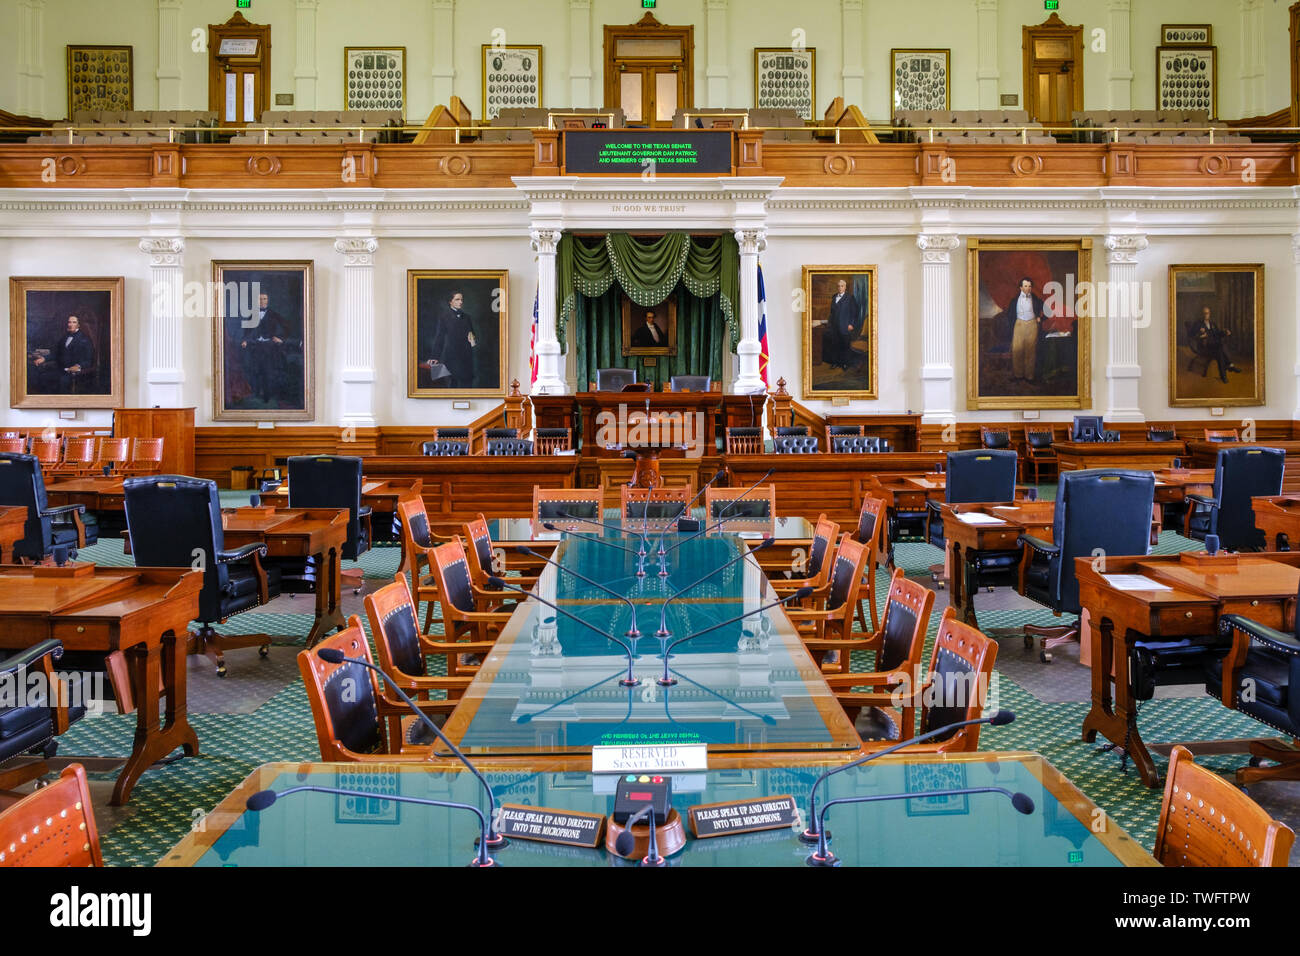 AUSTIN, Texas - Interior of the Senate chamber of the Legislature of the State of Texas inside the Texas State Capitol in Austin, Texas. Stock Photo